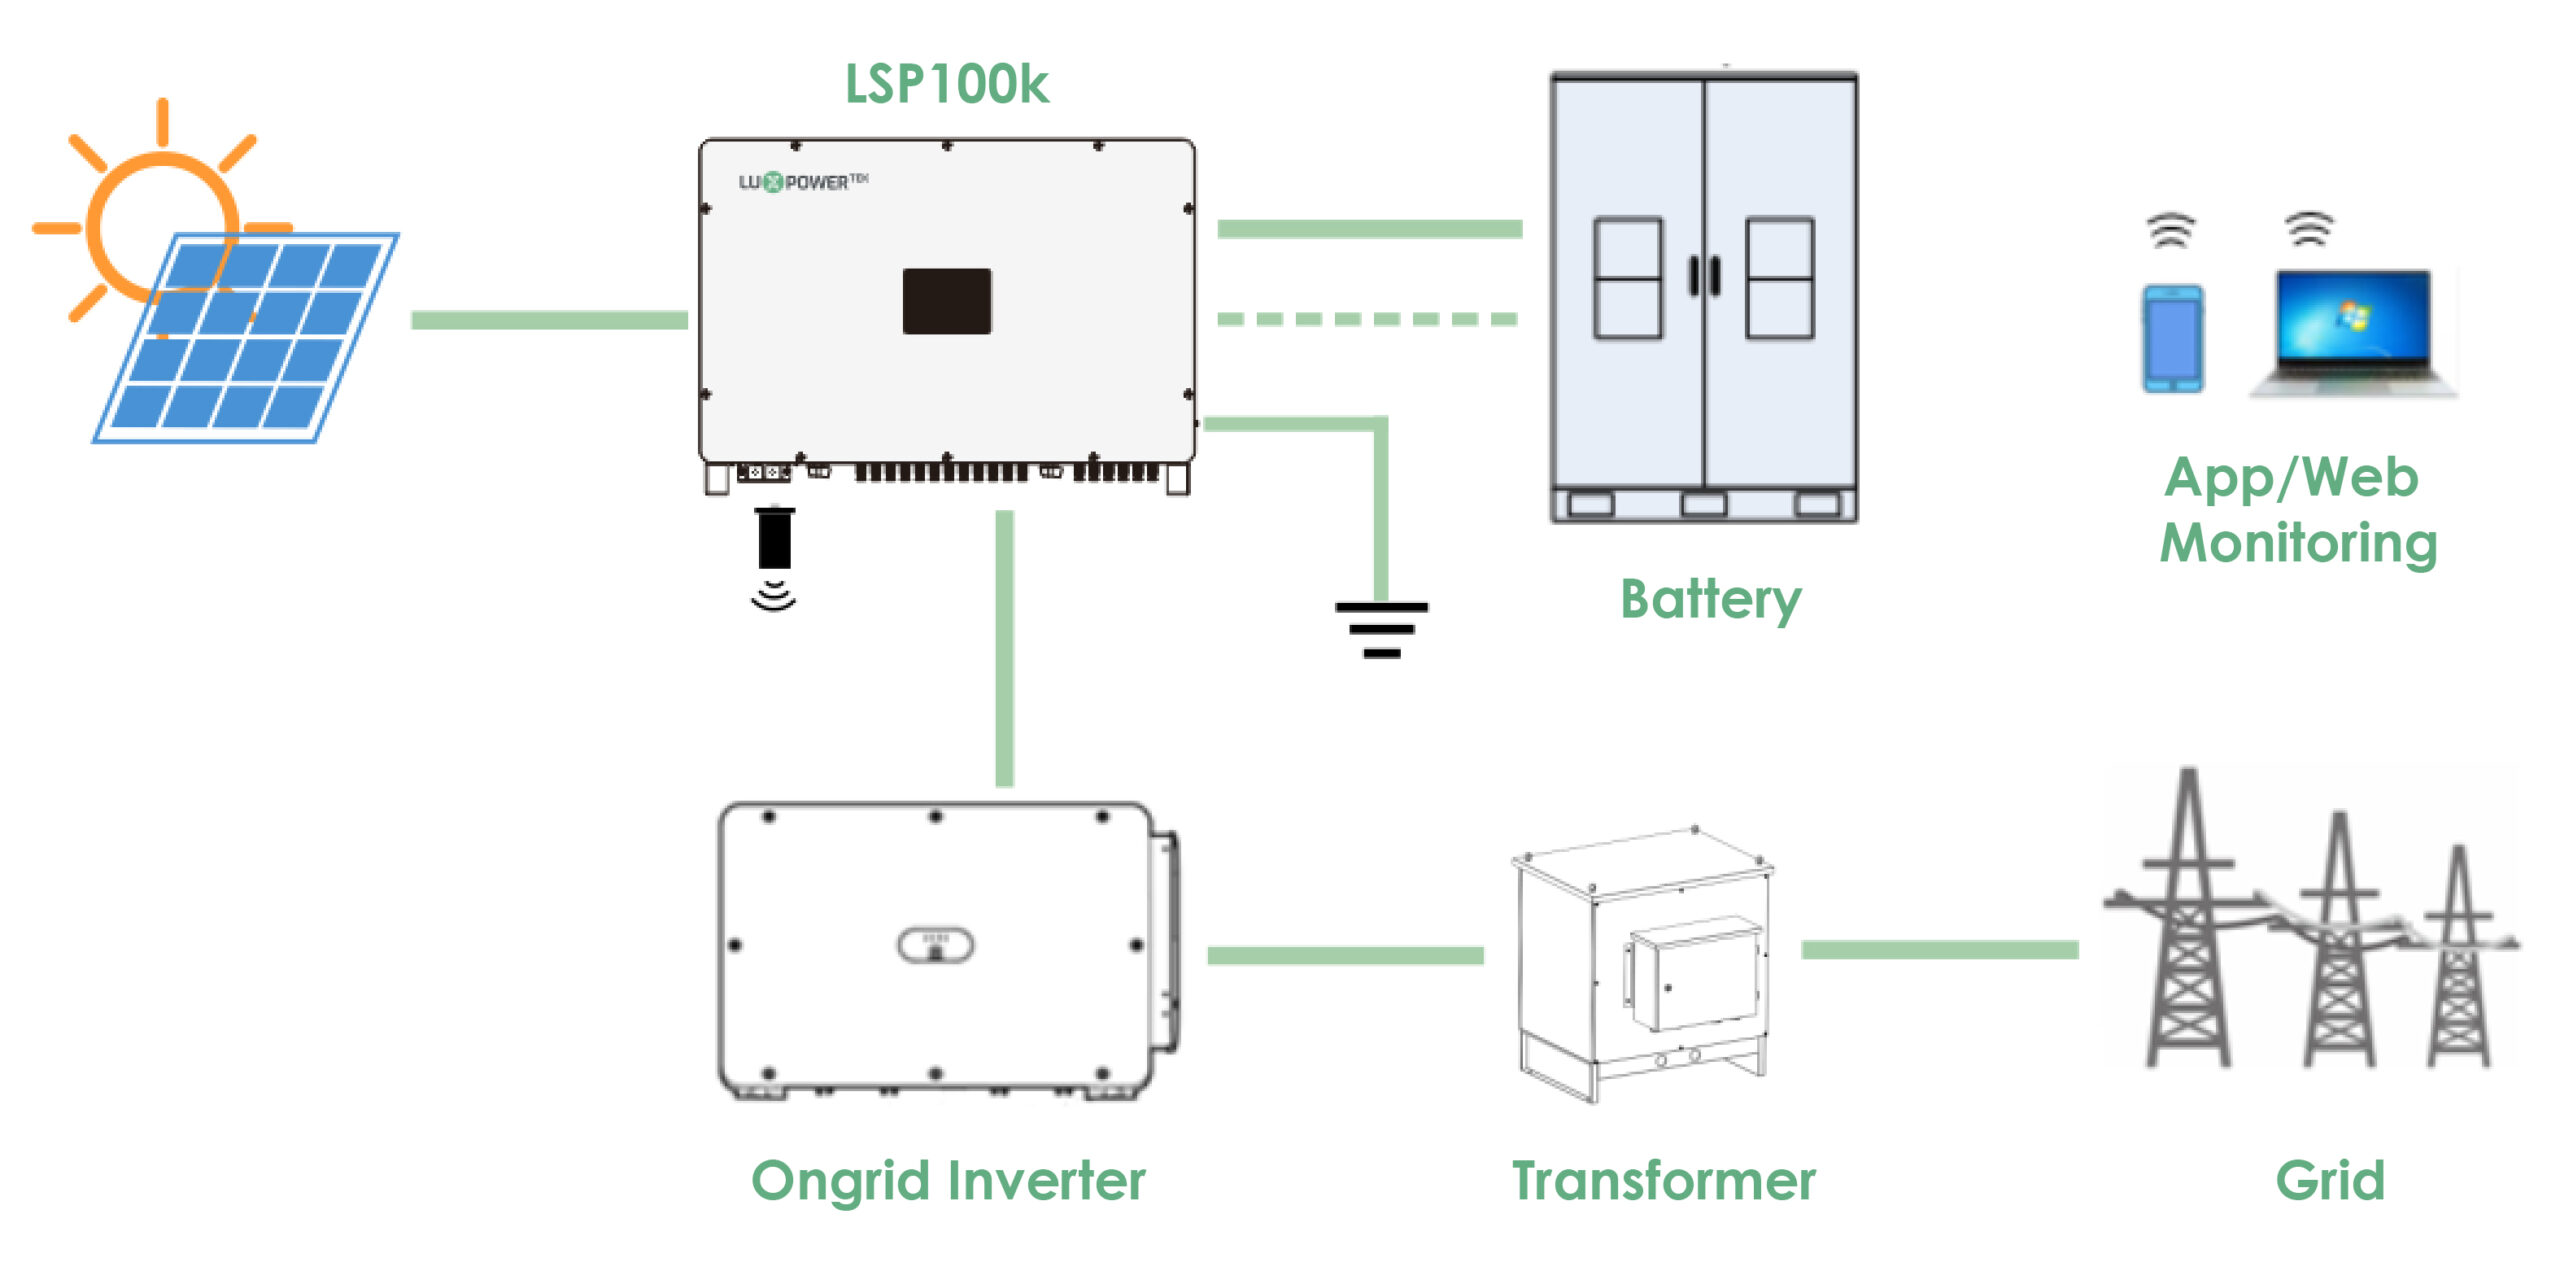 DC/DC Luxpower LSP100k Solar Inverter